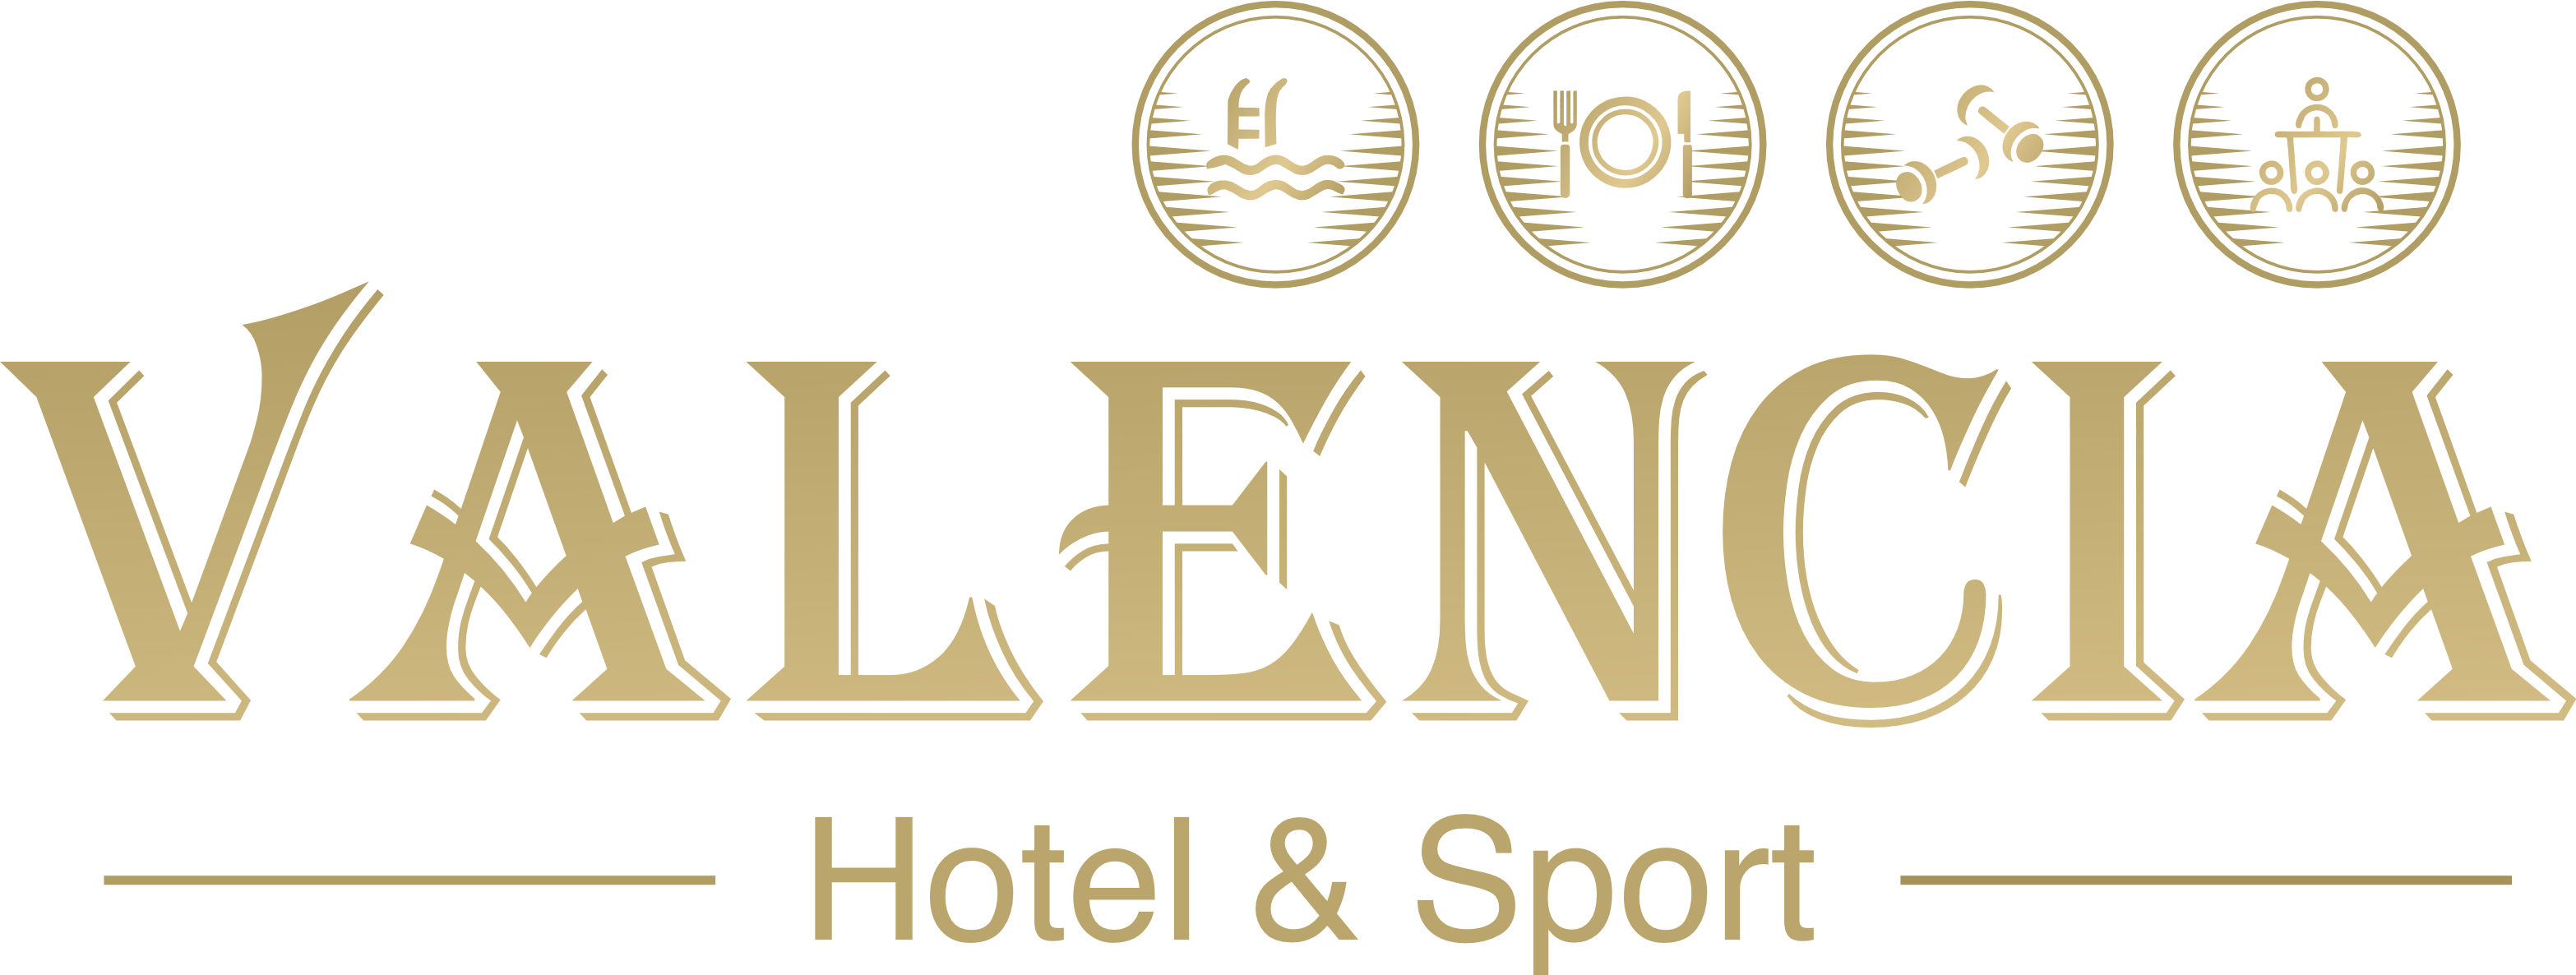 Отель Валенсия hotel & sport